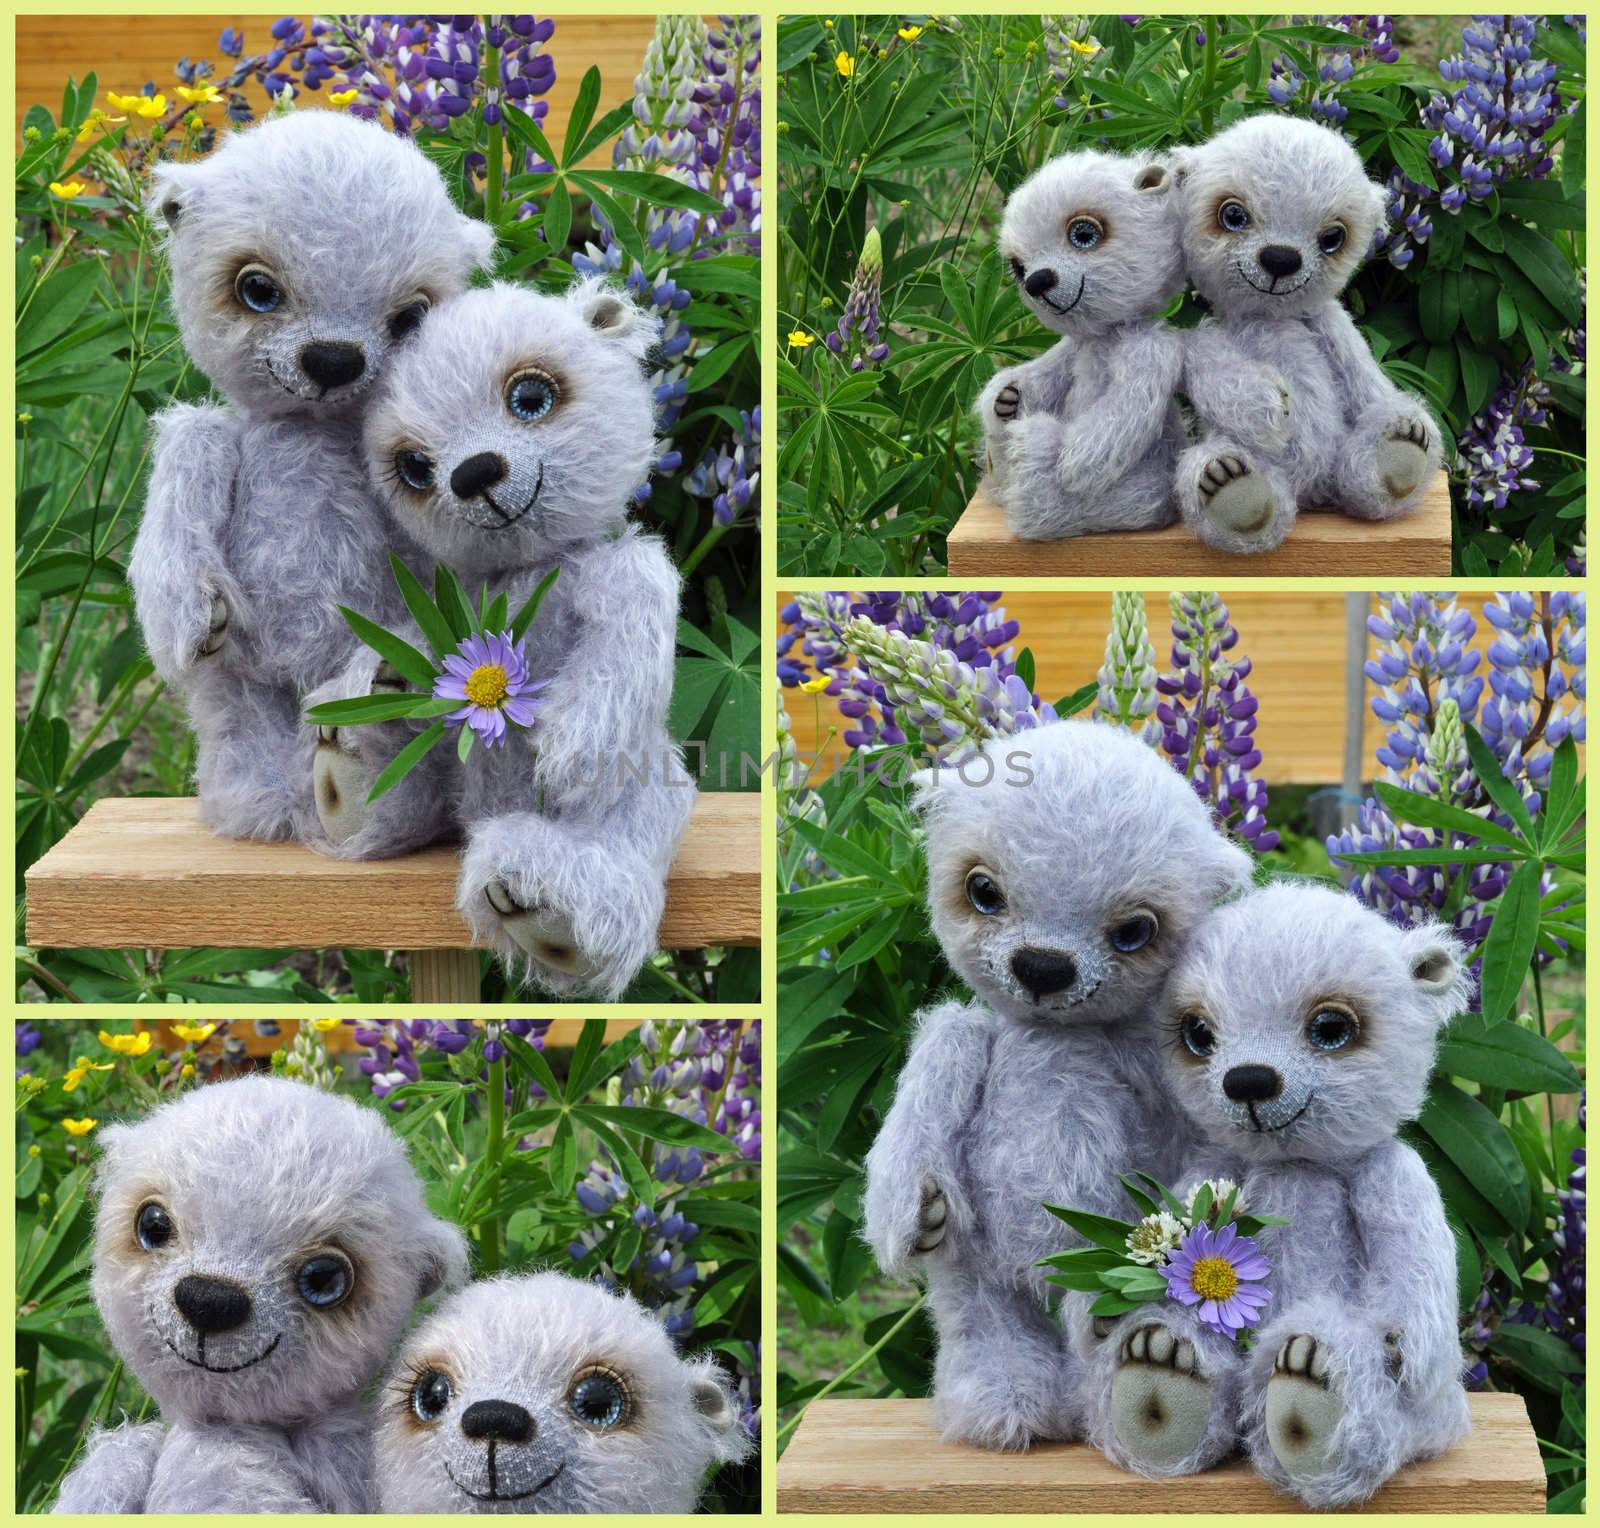 Teddy bears by alexcoolok